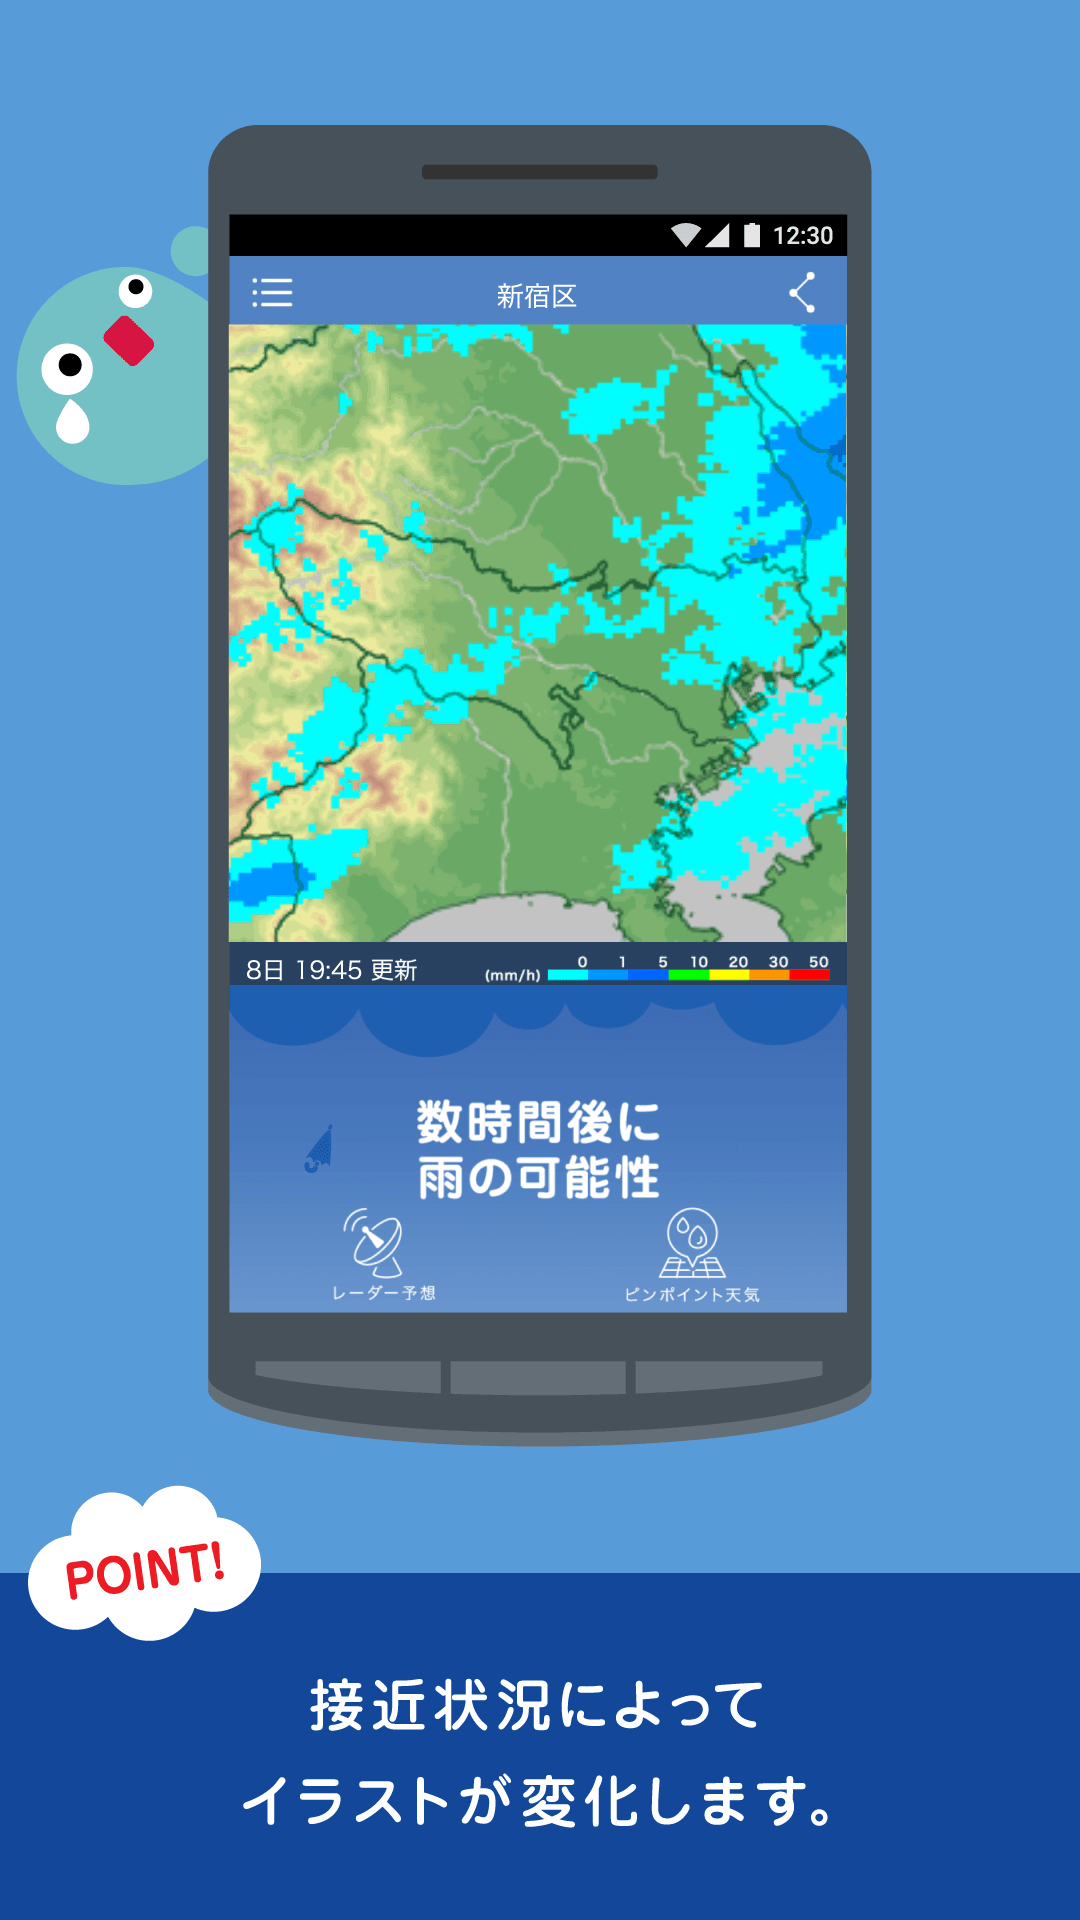 Android application 雨降りアラート - お天気ナビゲータ screenshort